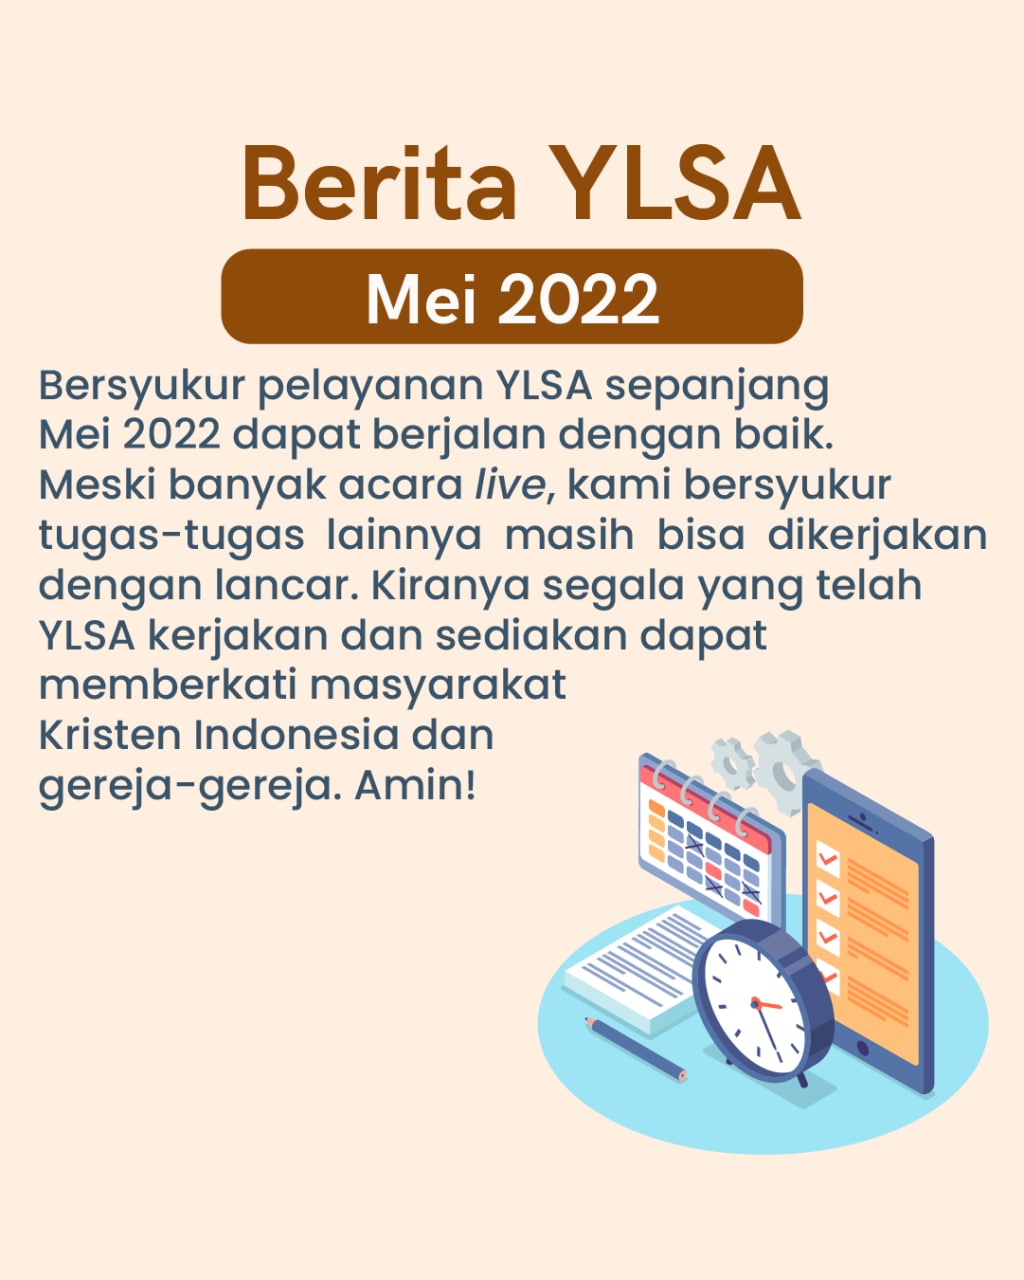 Bersyukur pelayanan YLSA sepanjang Mei 2022 dapat berjalan dengan baik. Kiranya segala yang telah YLSA kerjakan dan sediakan menjadi berkat bagi masyarakat Kristen Indonesia dan gereja-gereja. Amin!